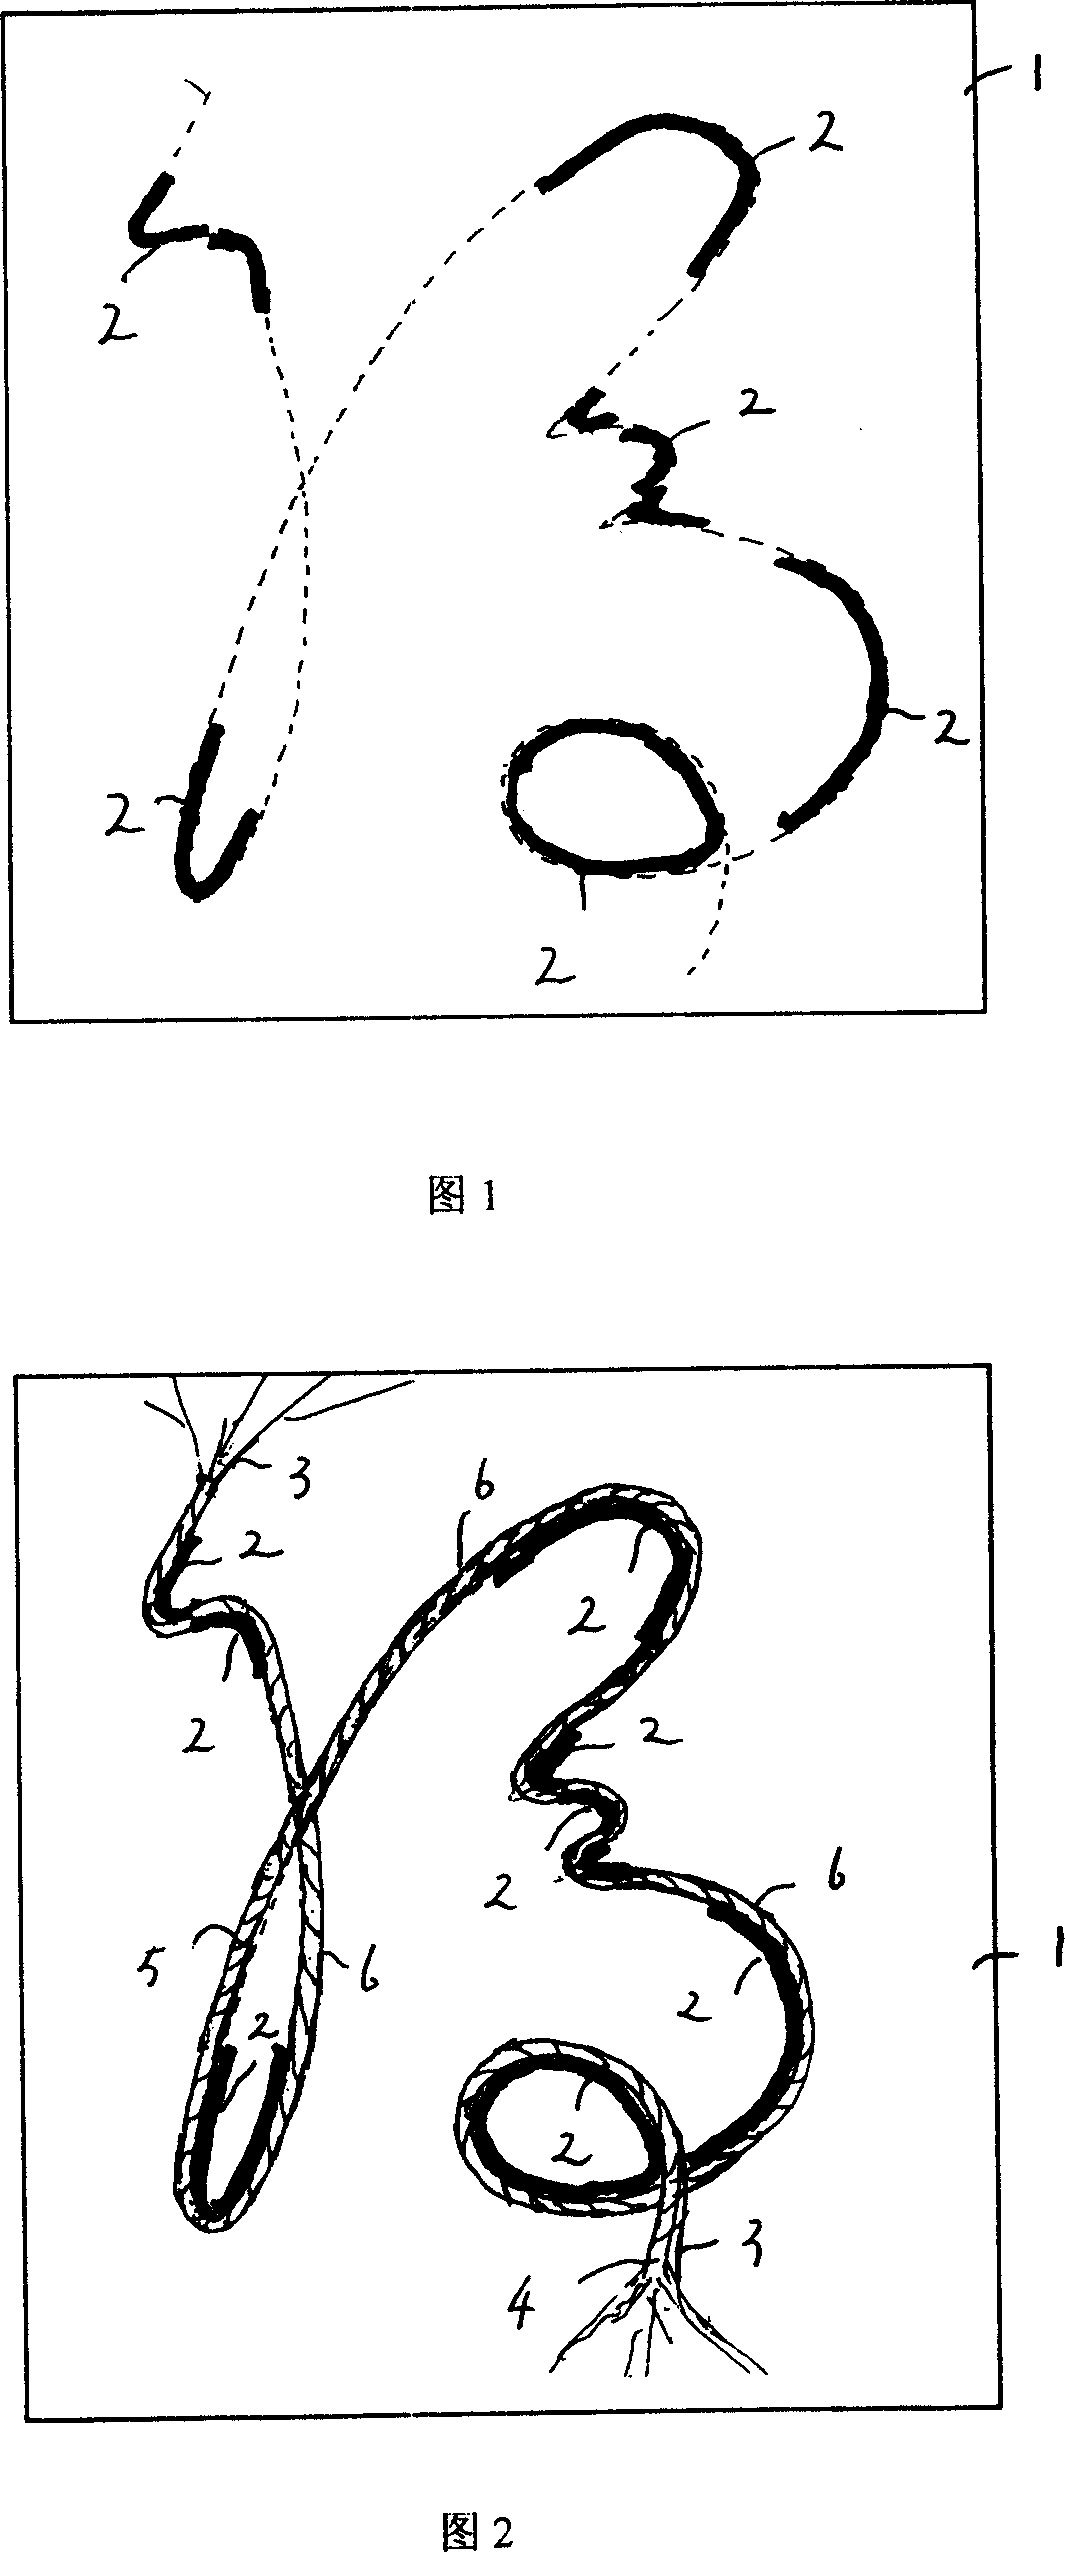 Mold shaping method for cursive script potted landscape